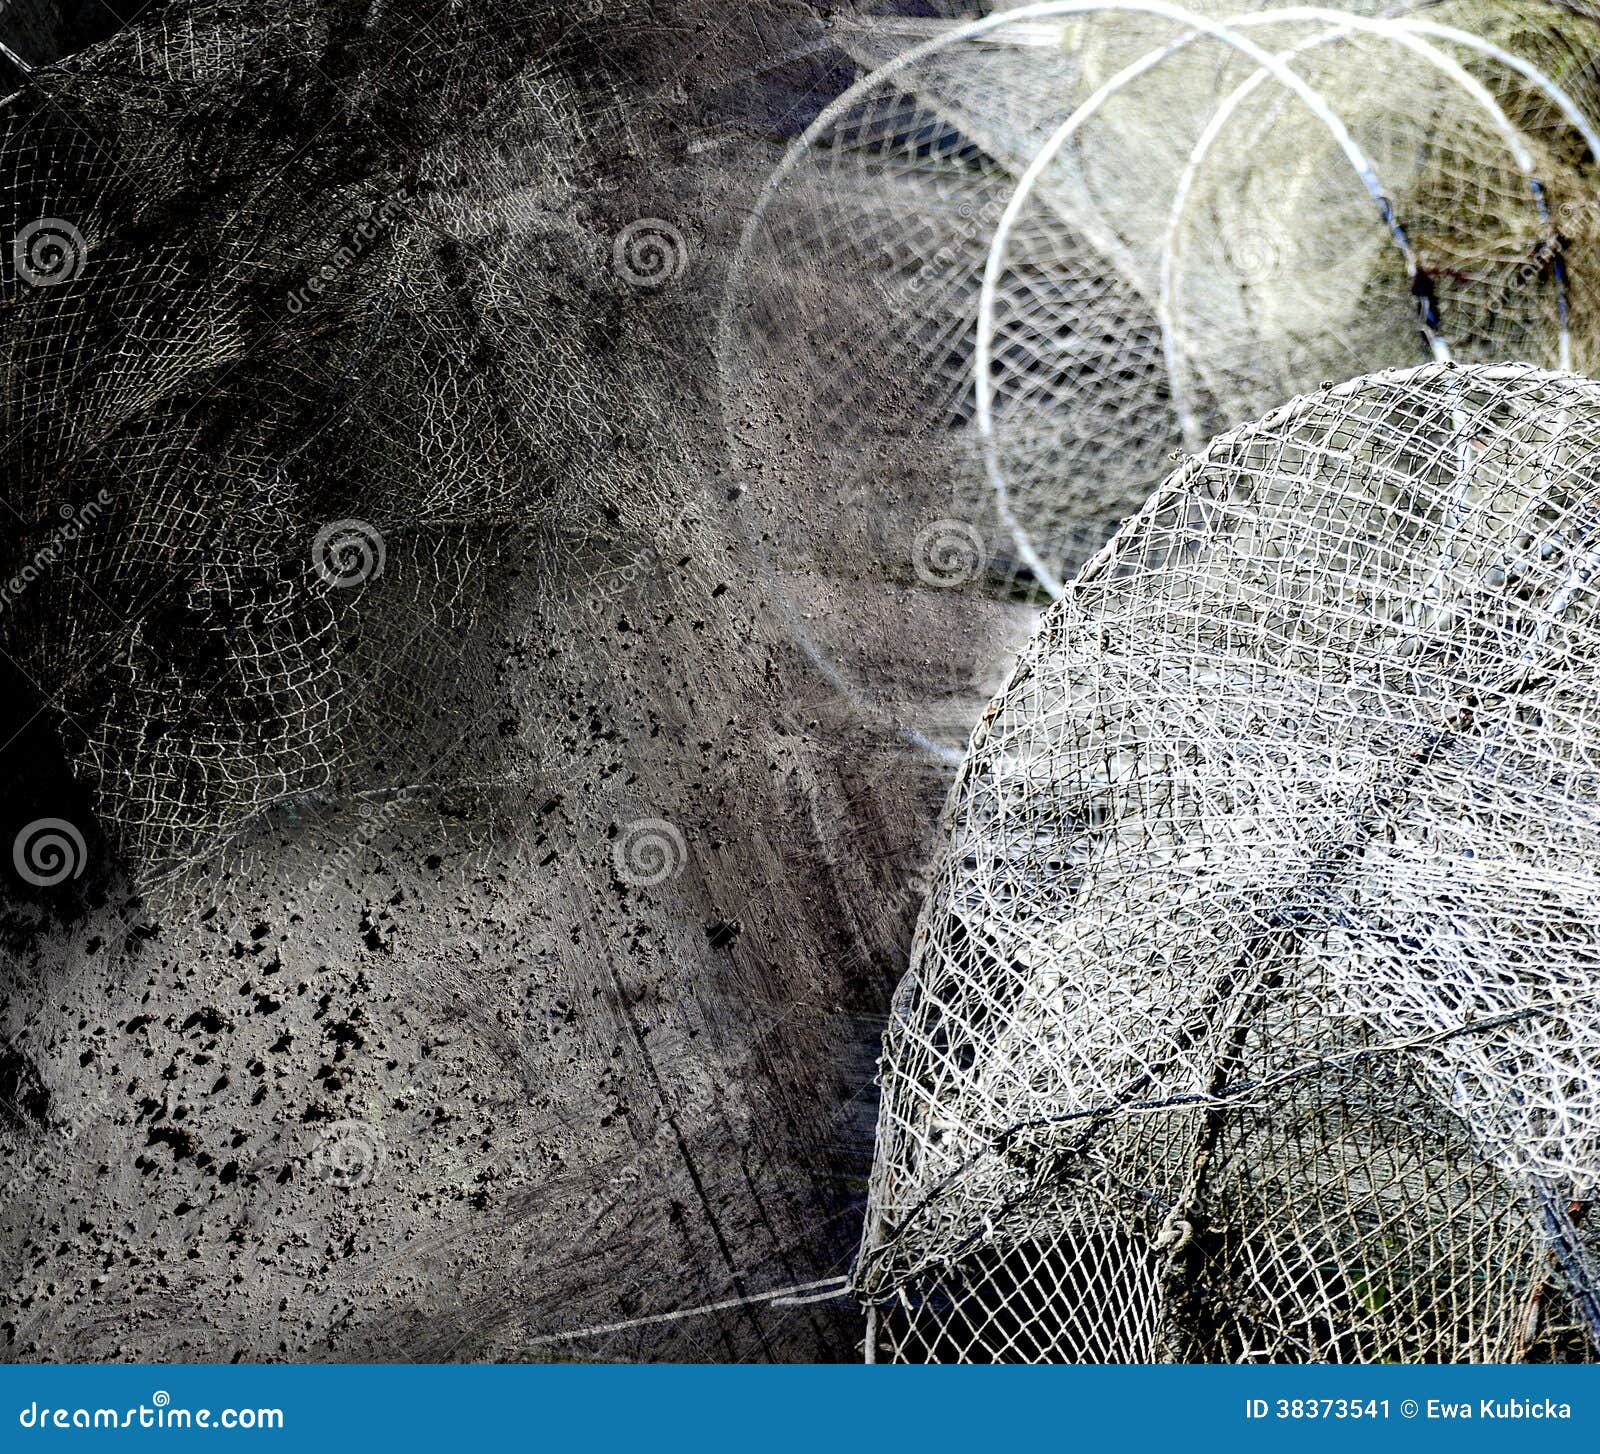 Fishing net, texture stock image. Image of tool, fishing - 38373541